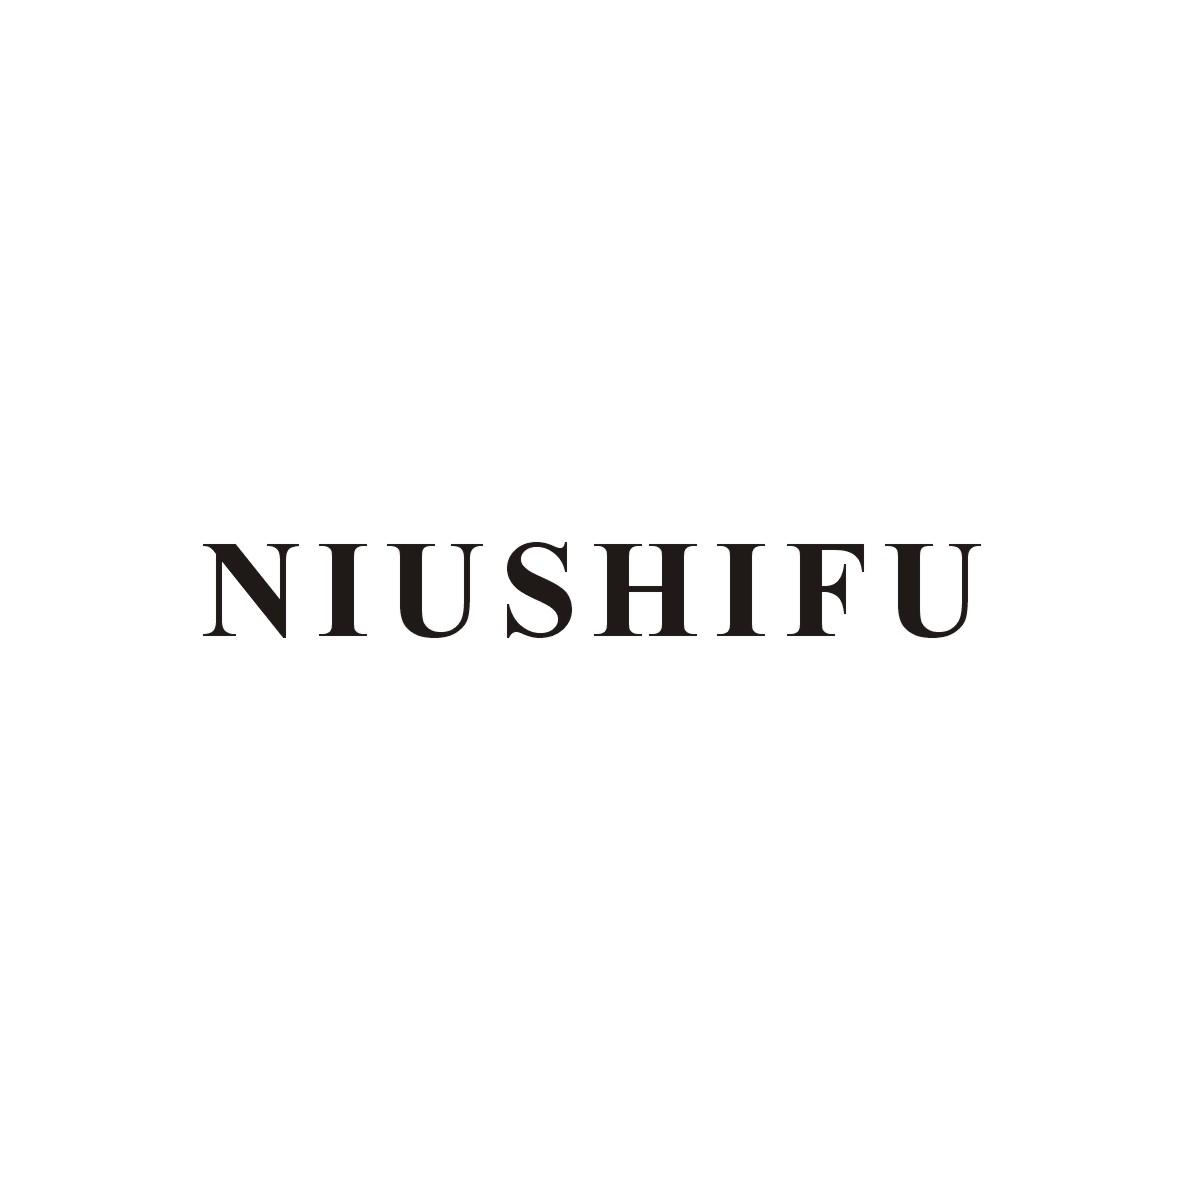 NIUSHIFU